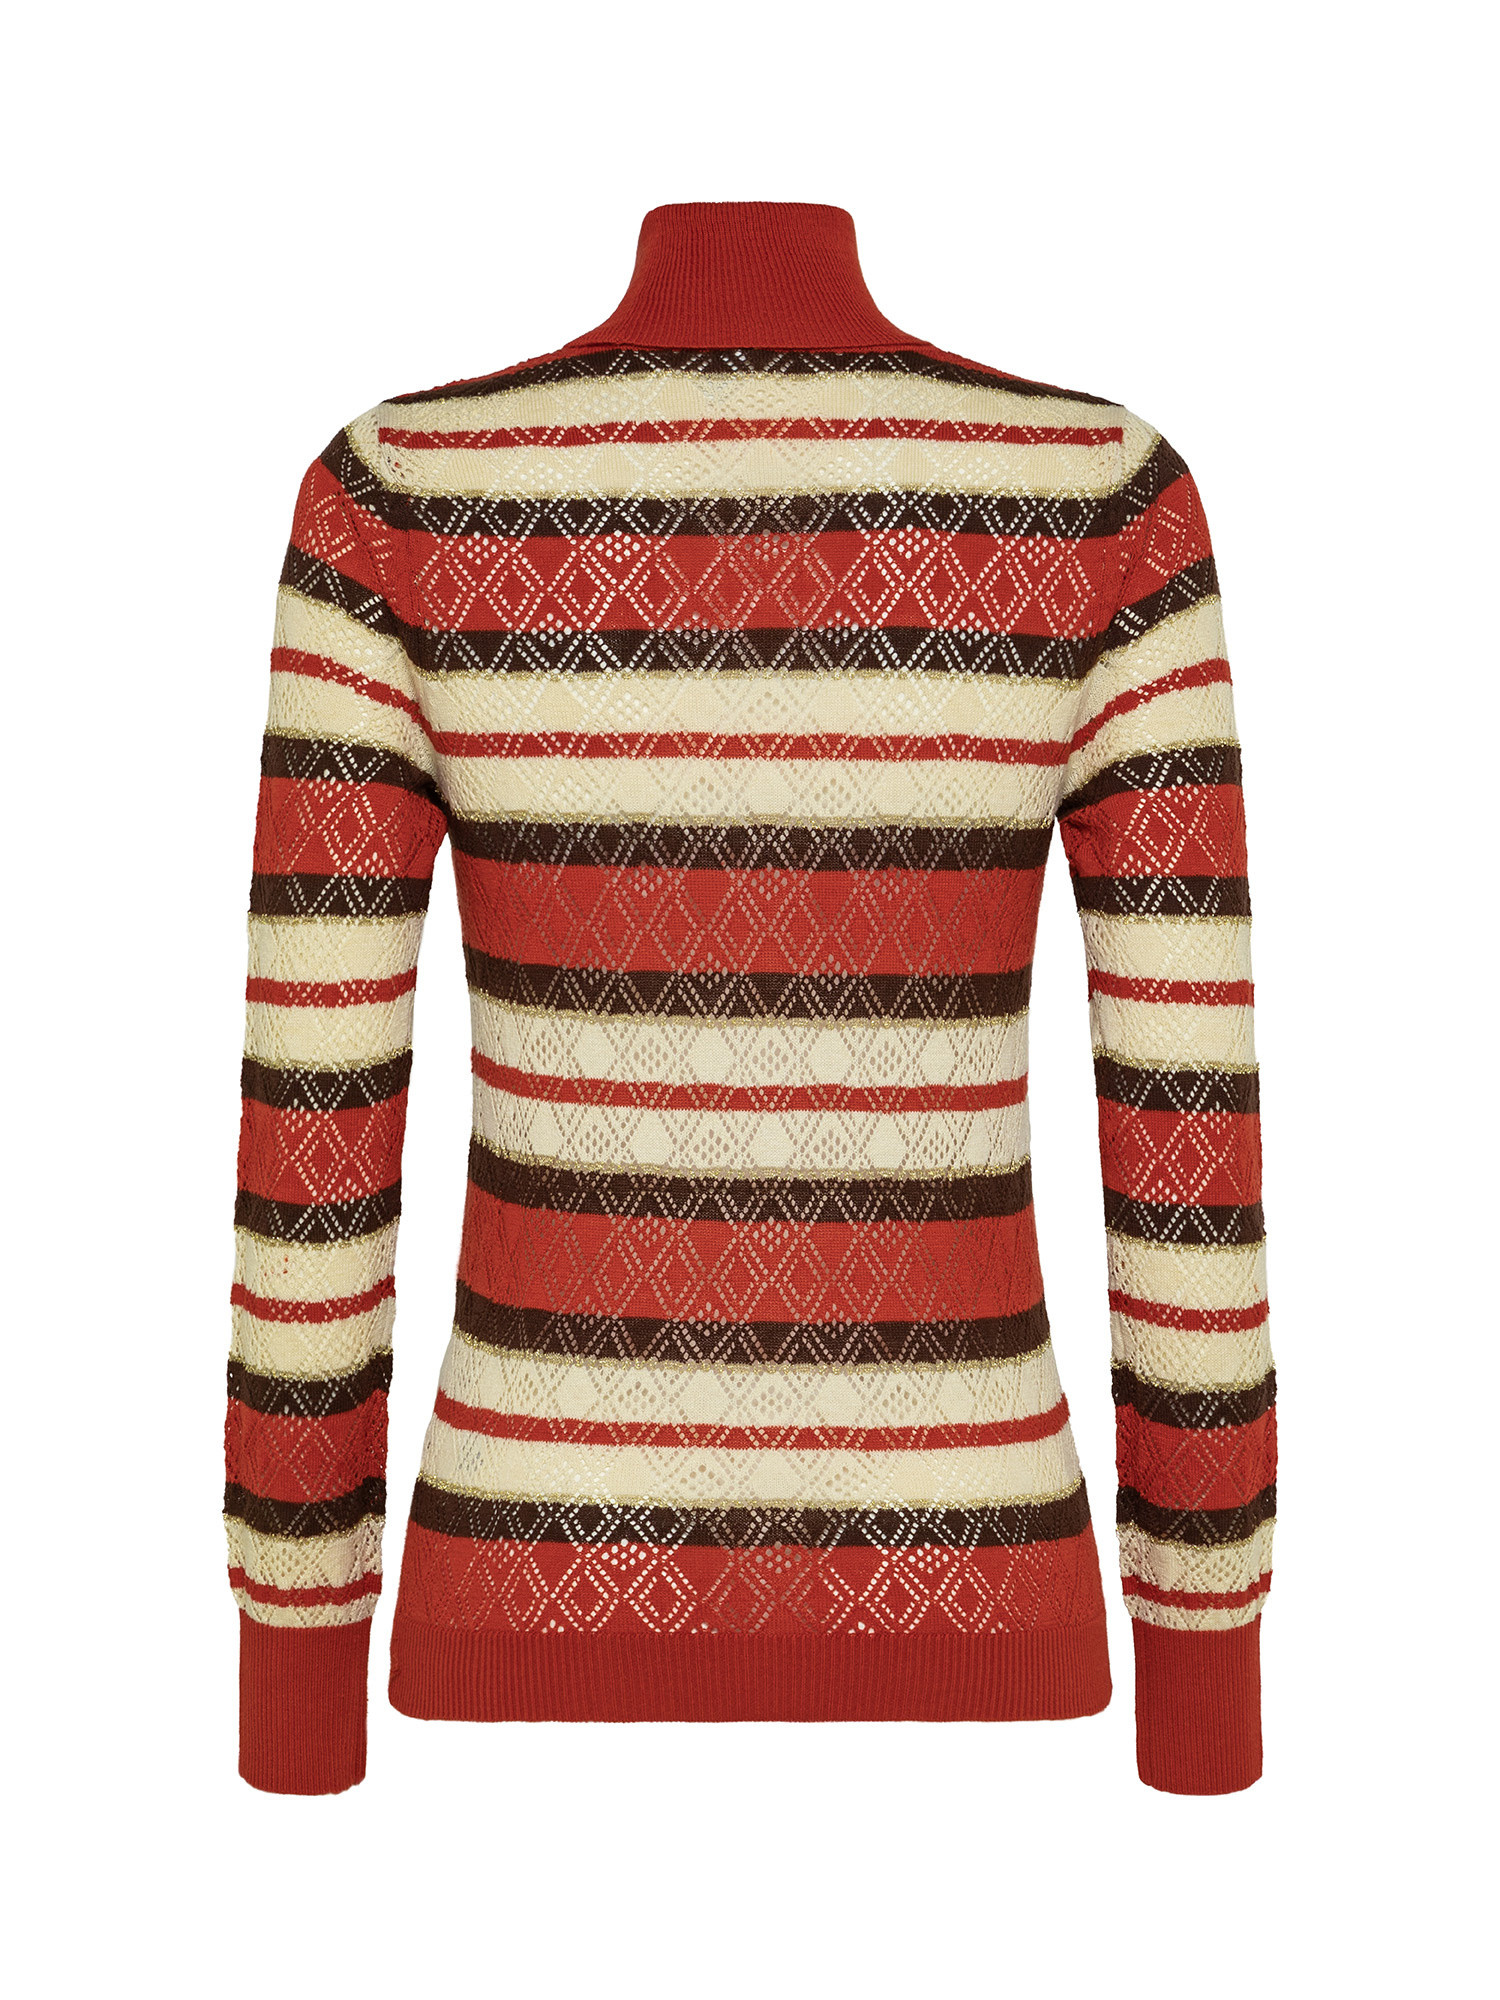 Striped turtleneck sweater, Multicolor, large image number 1